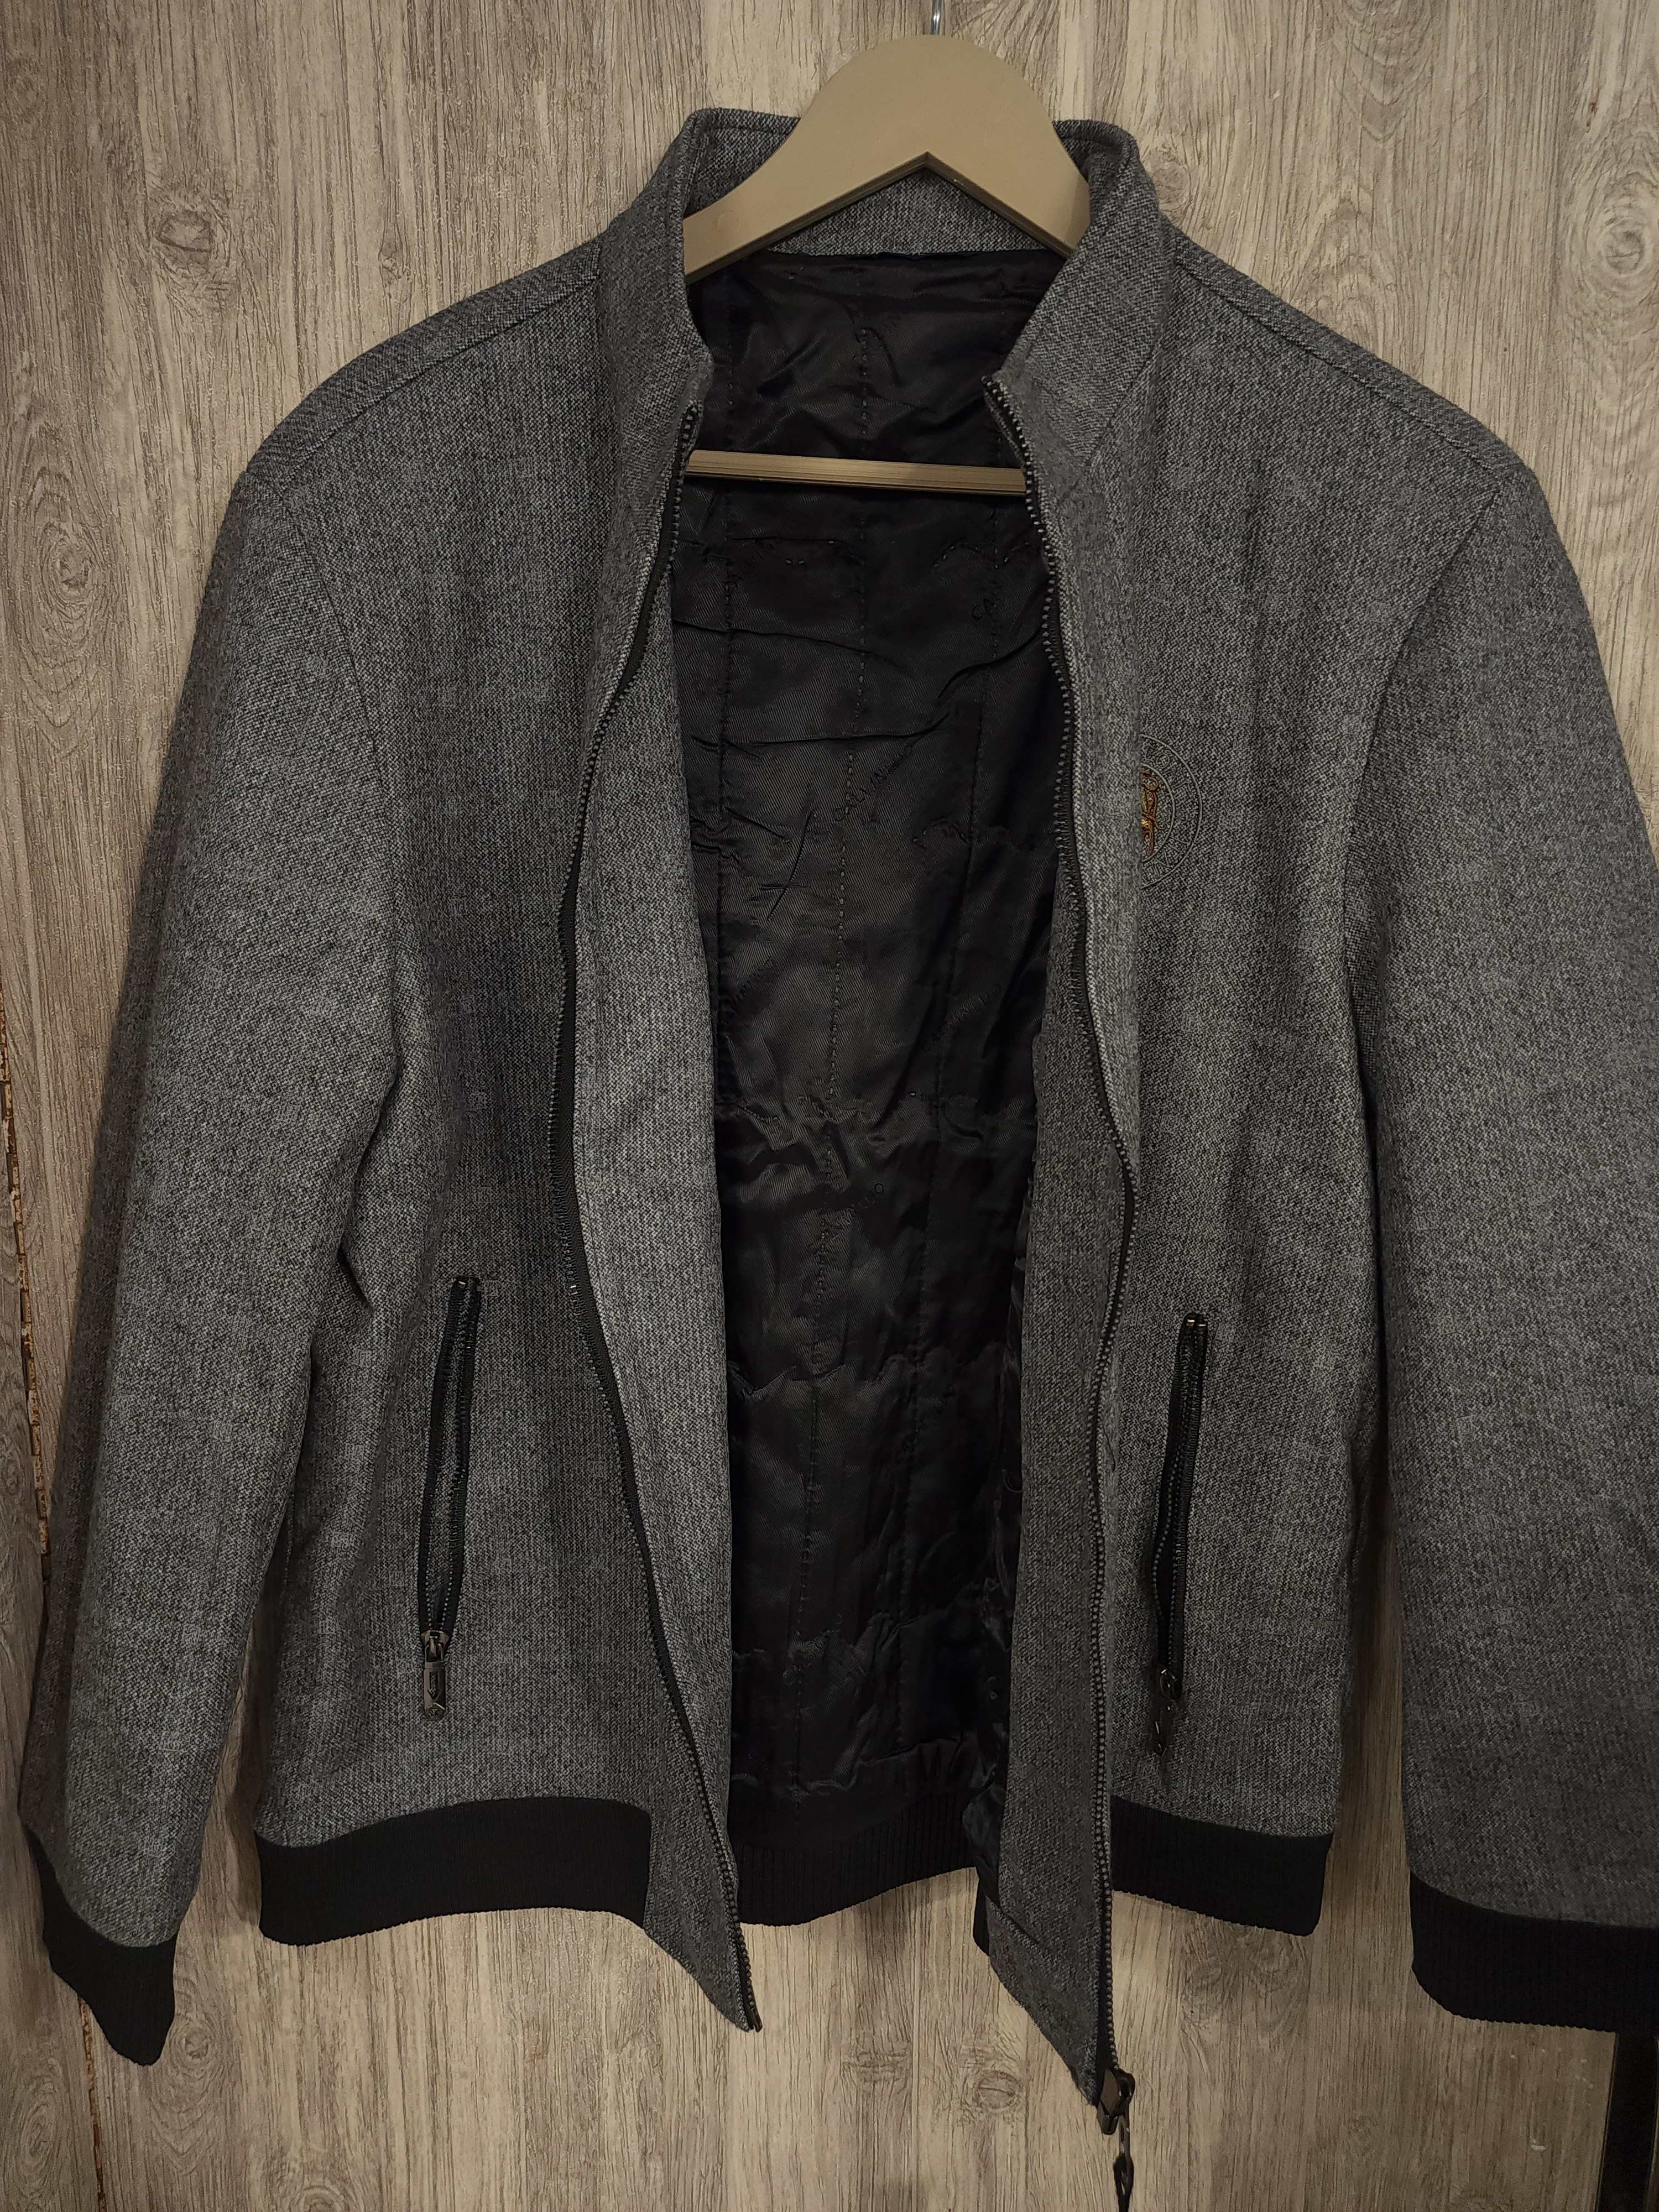 Grey Men Woolen Jacket - Maha fashions -  Men Clothing